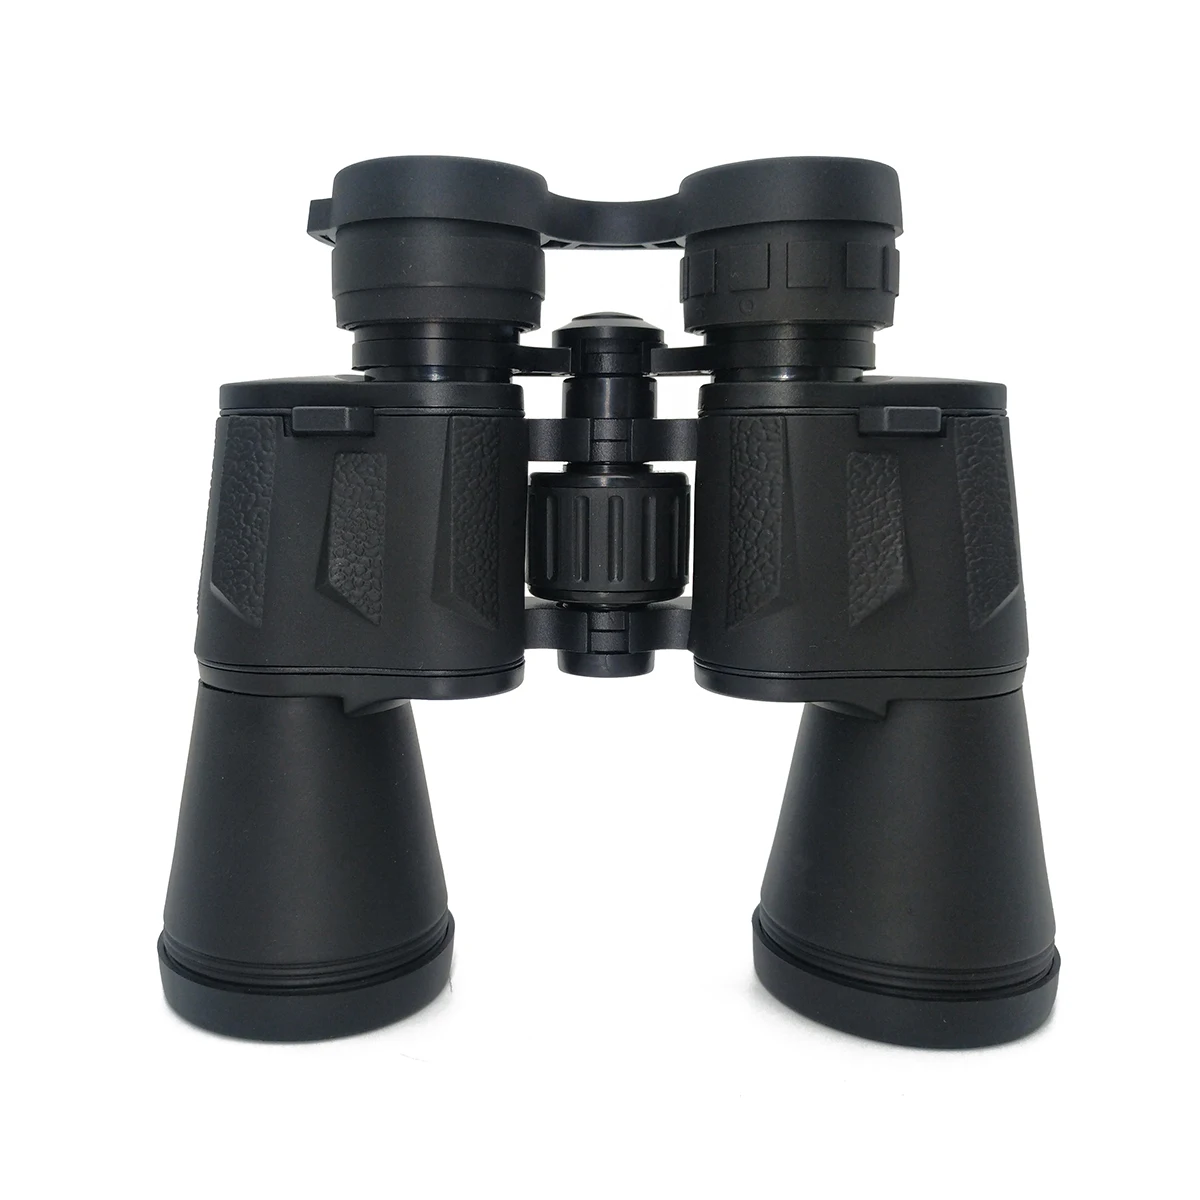 

TONTUBE Powerful Professional Binoculars Long Range 7x50 12x50 Porro Binoculars Observation Telescope for Hunting Goods Travel